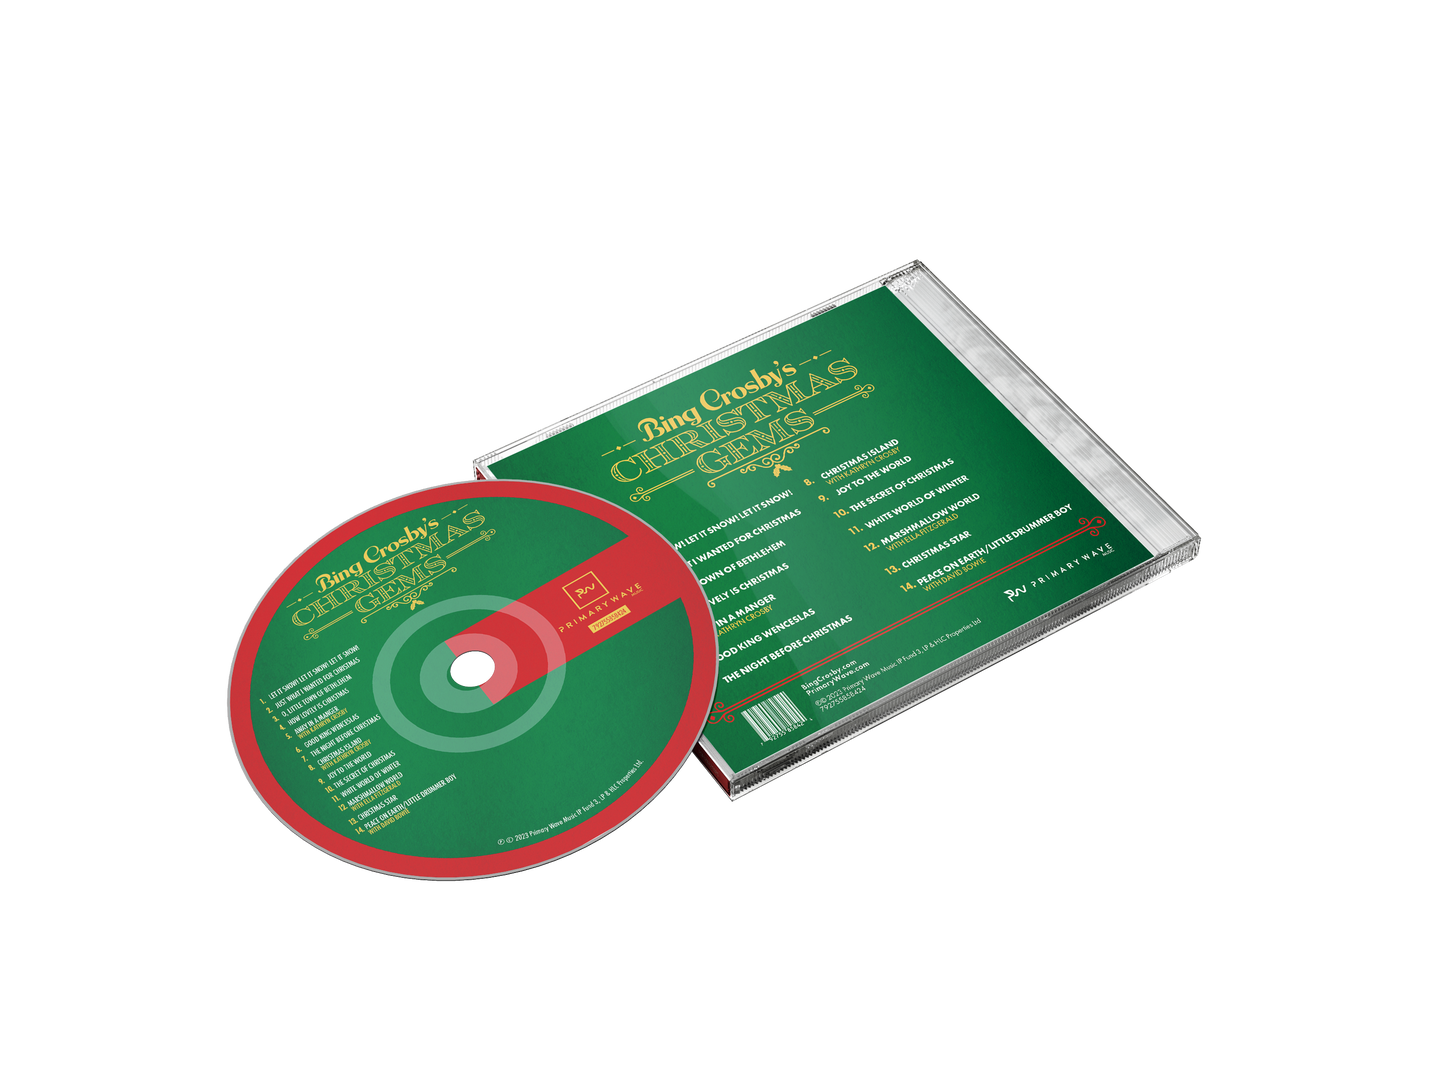 Bing Crosby's Christmas Gems CD